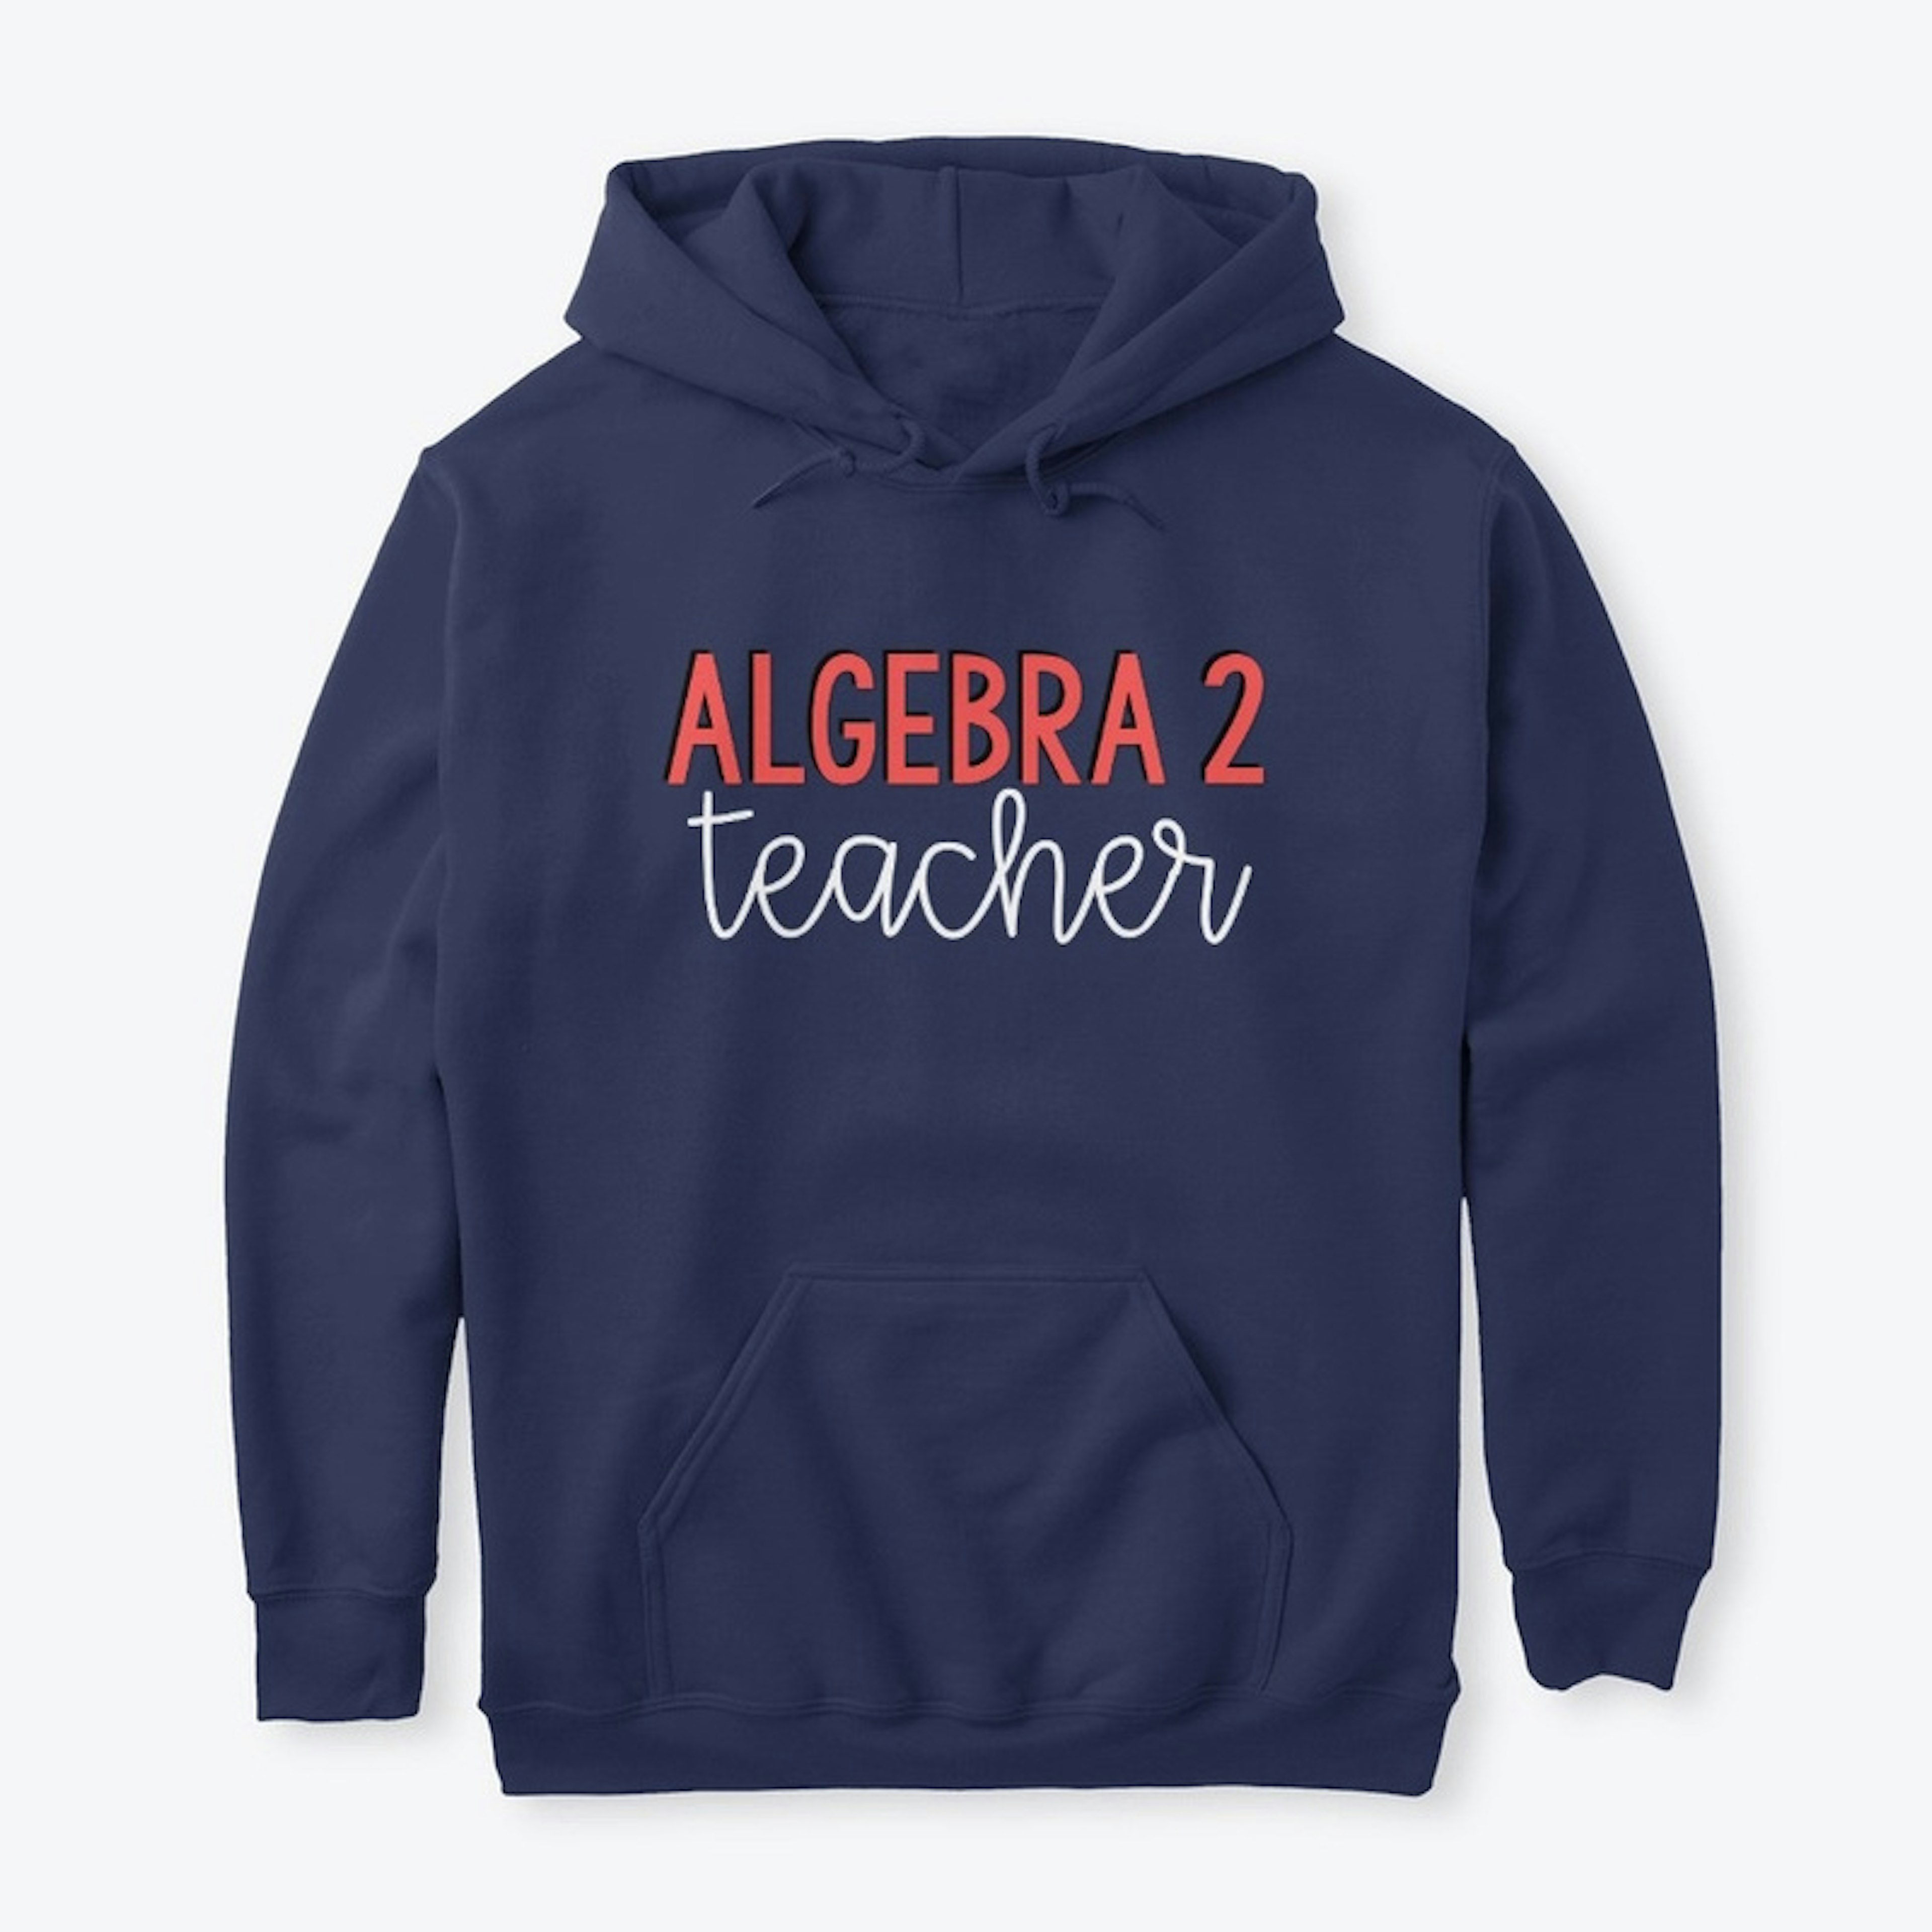 Algebra 2 Teacher Hoodie